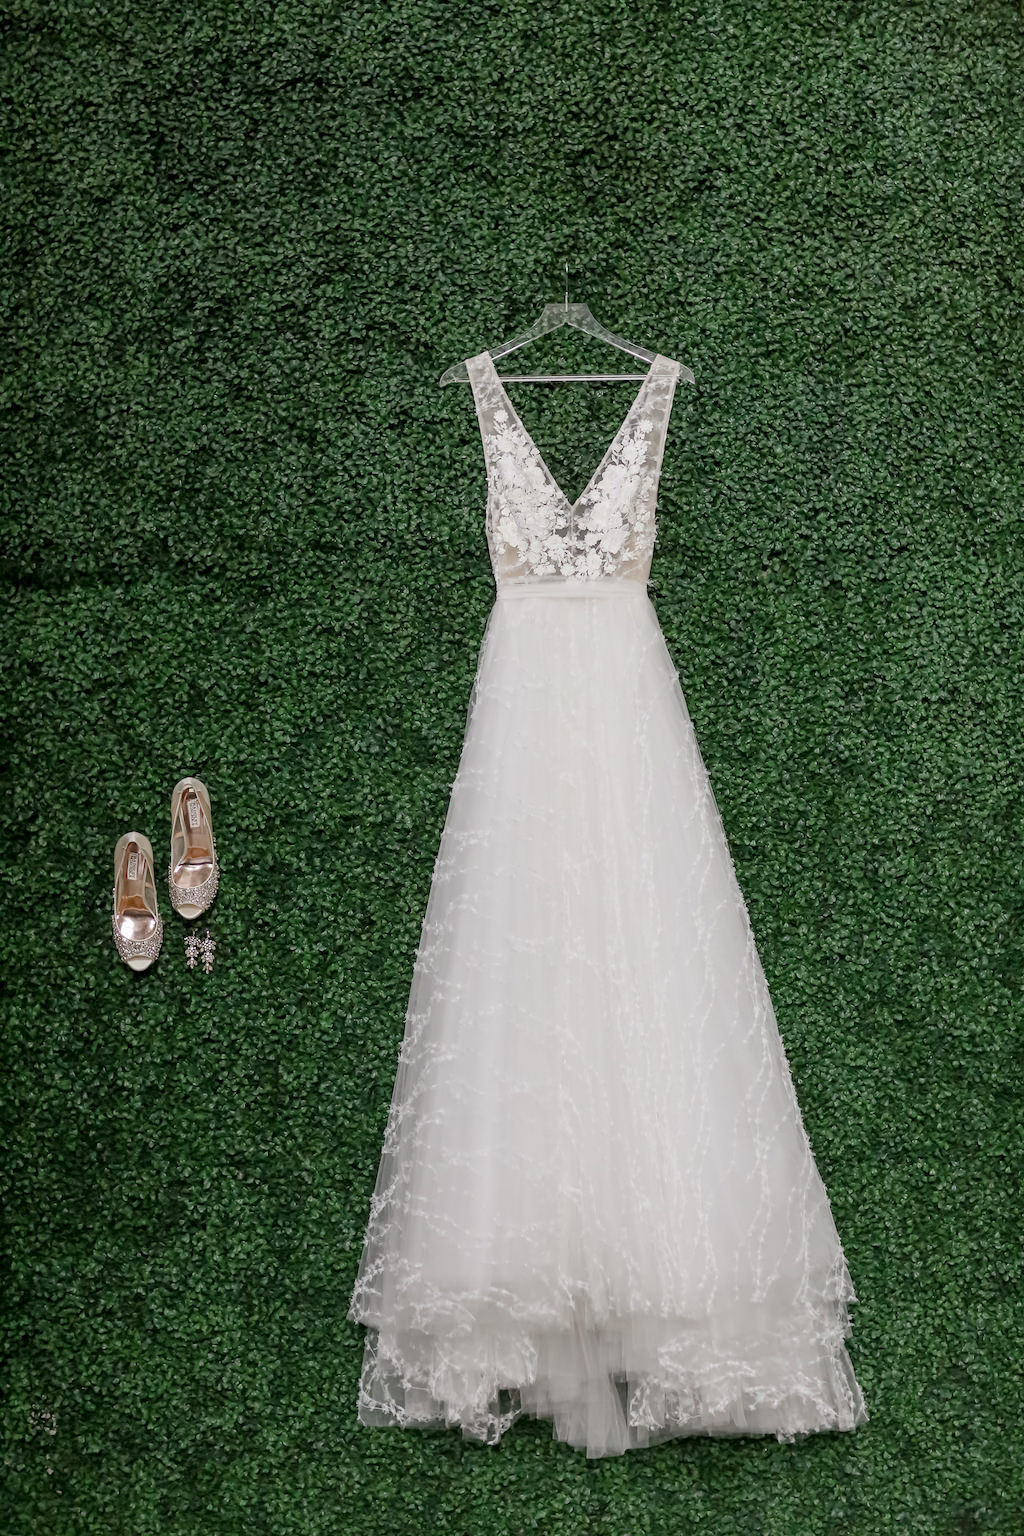 Lace Tank Top Wedding Dress 65 Off Awi Com